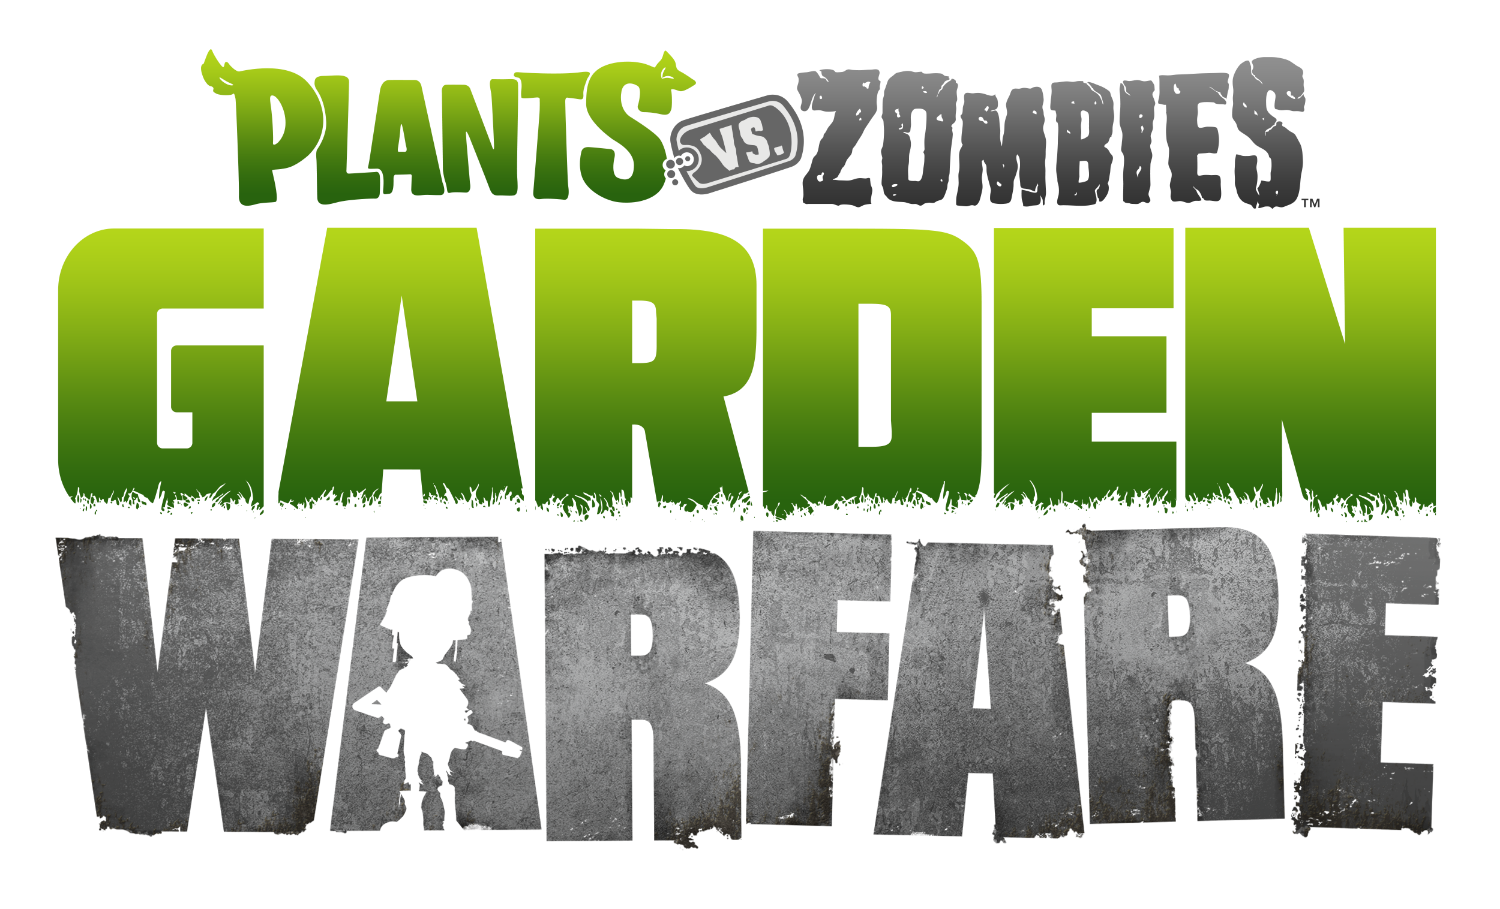 Play Plants vs. Zombies Garden Warfare 2 with a Free Origin Access